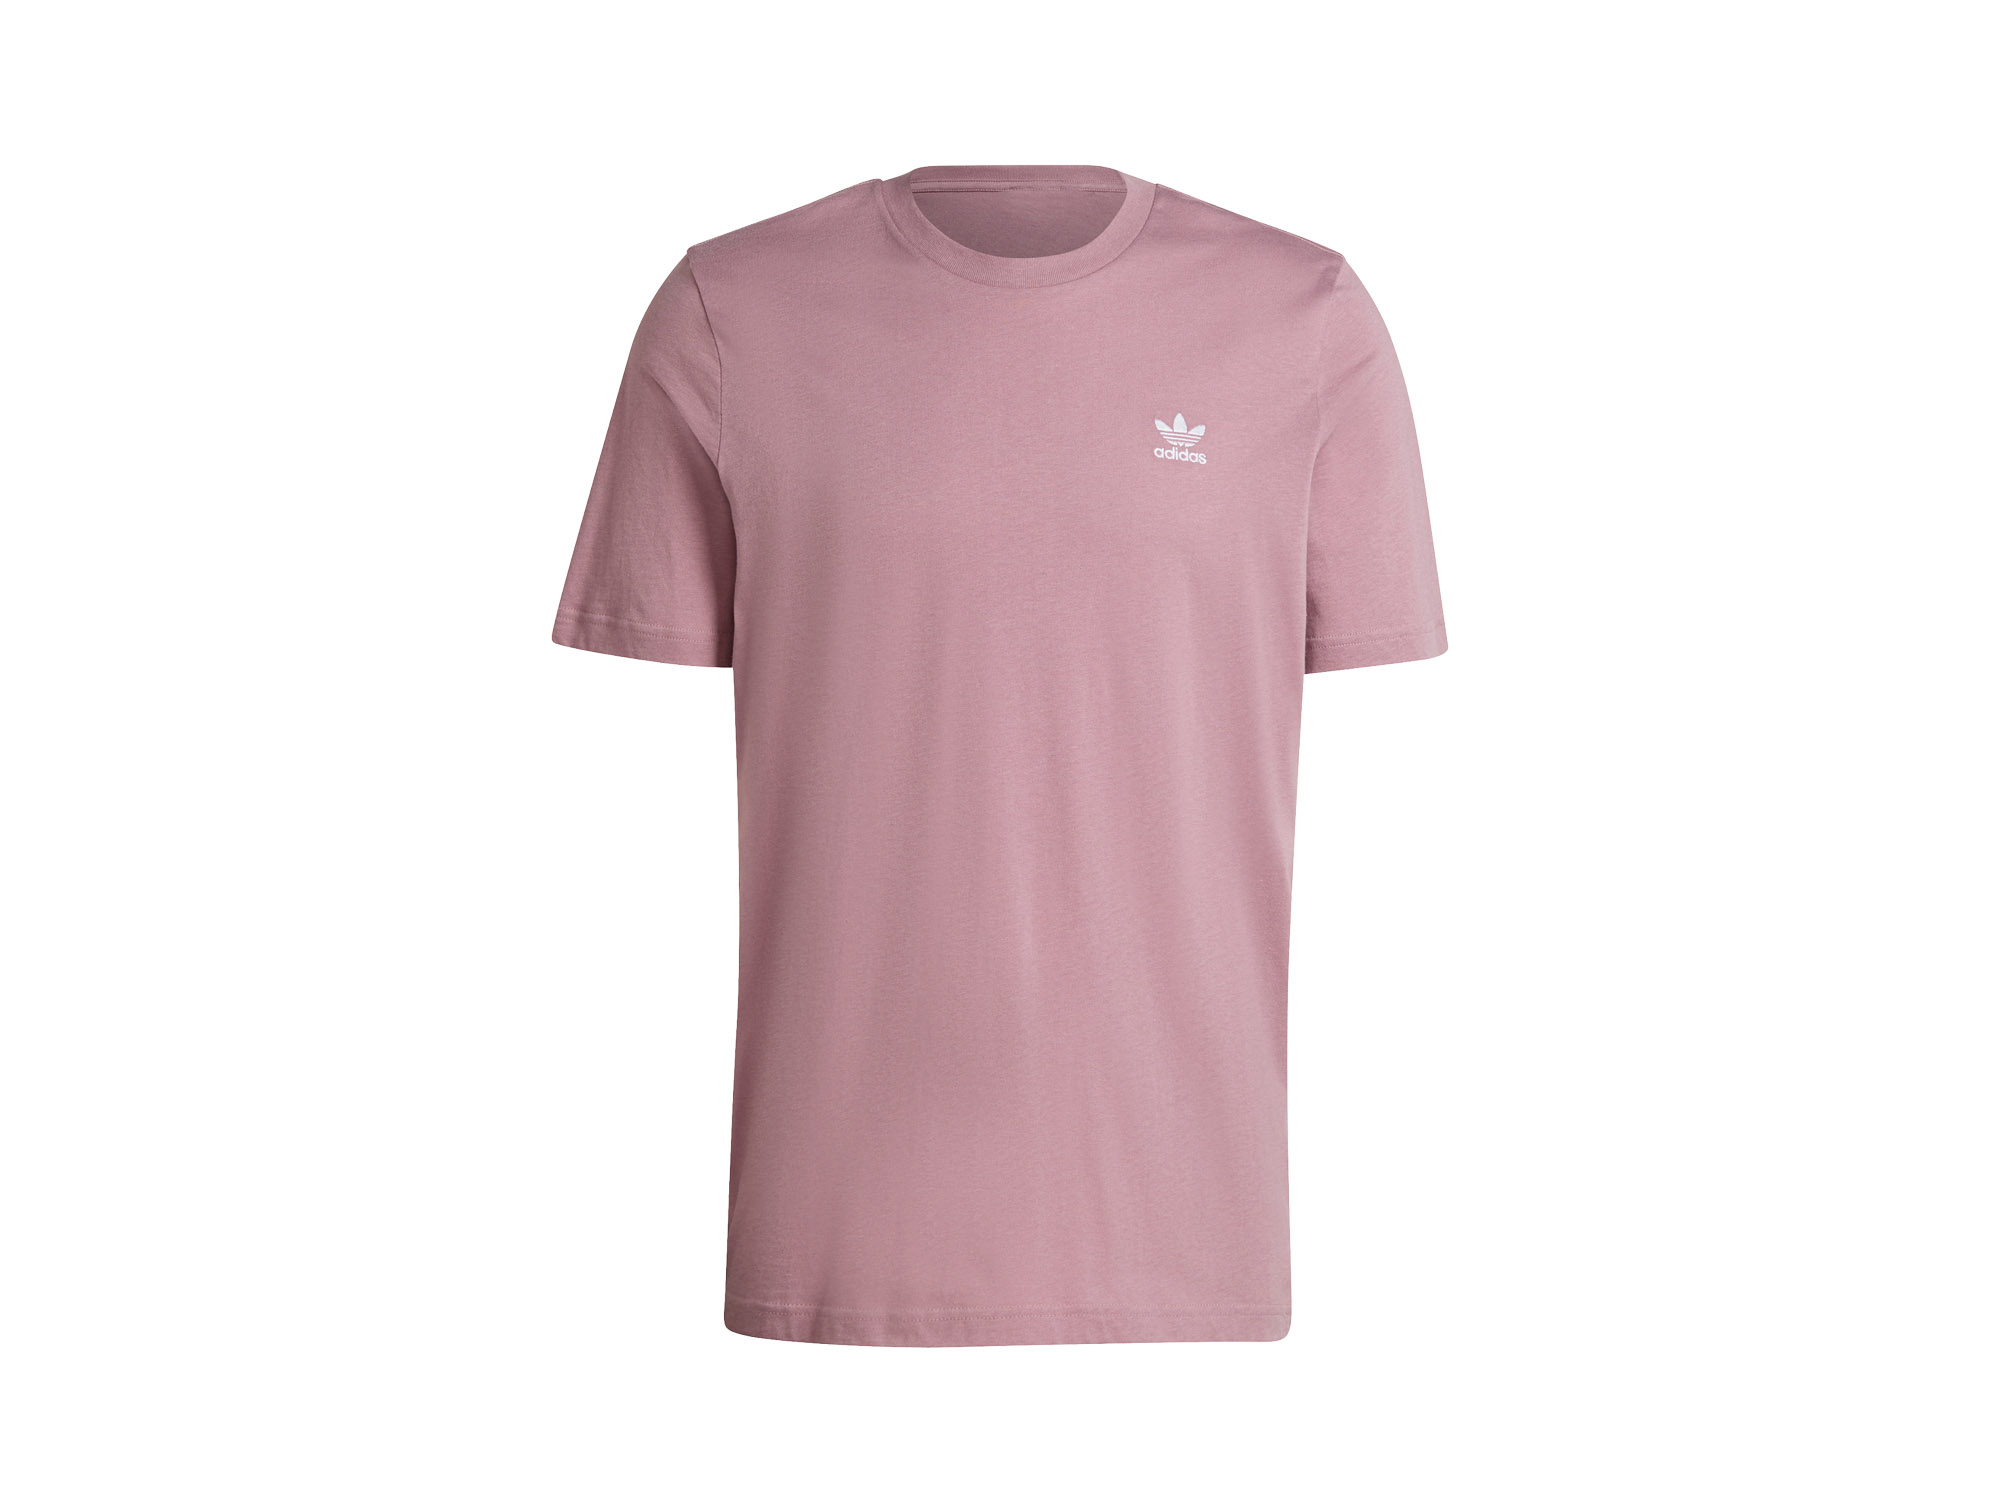 Adidas Originals Essentials Trefoil T-Shirt